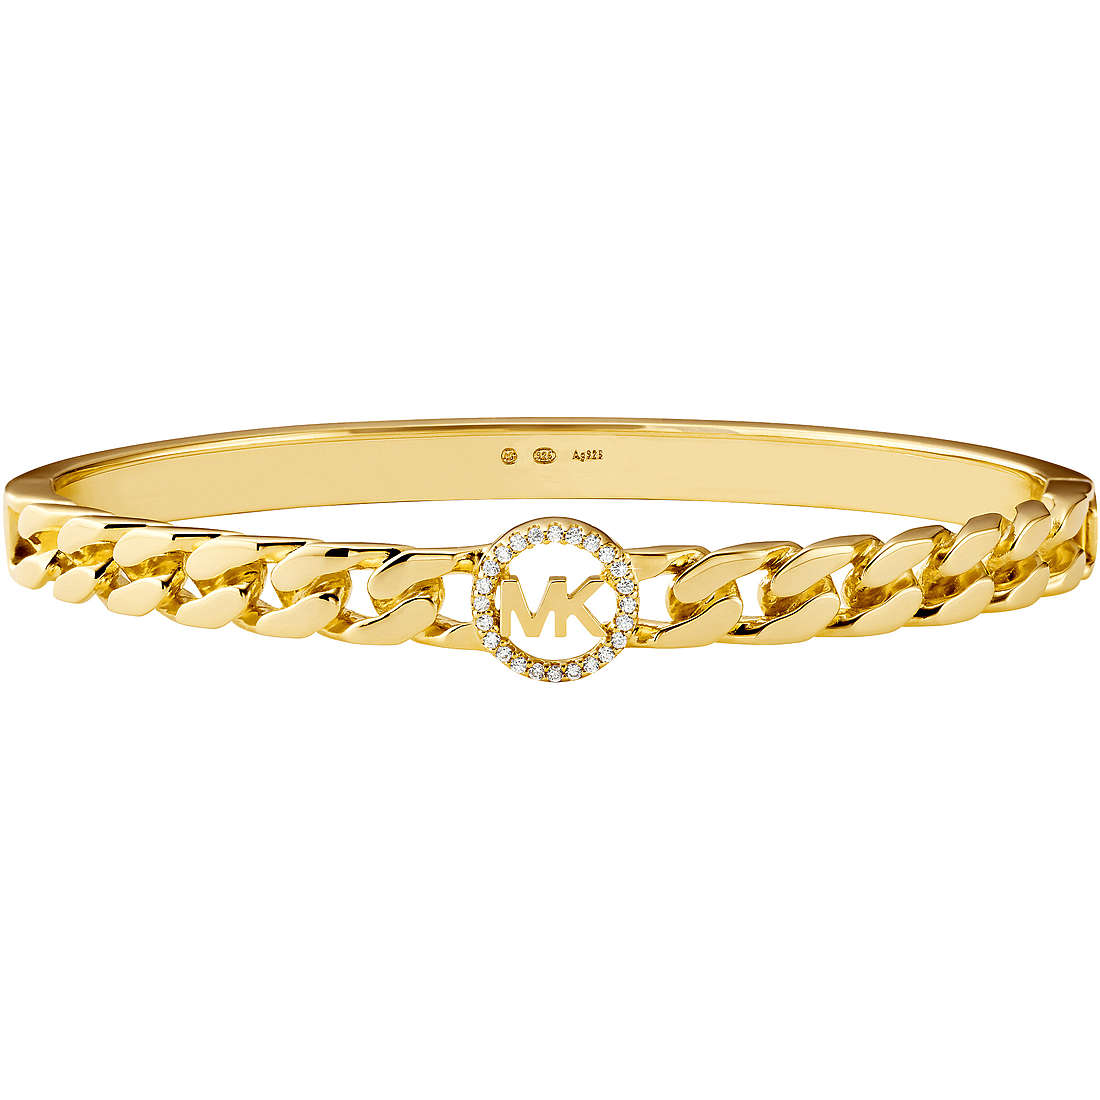 Michael Kors Premium bracelet woman Bracelet with 925 Silver Bangle/Cuff jewel MKC1381AN710M